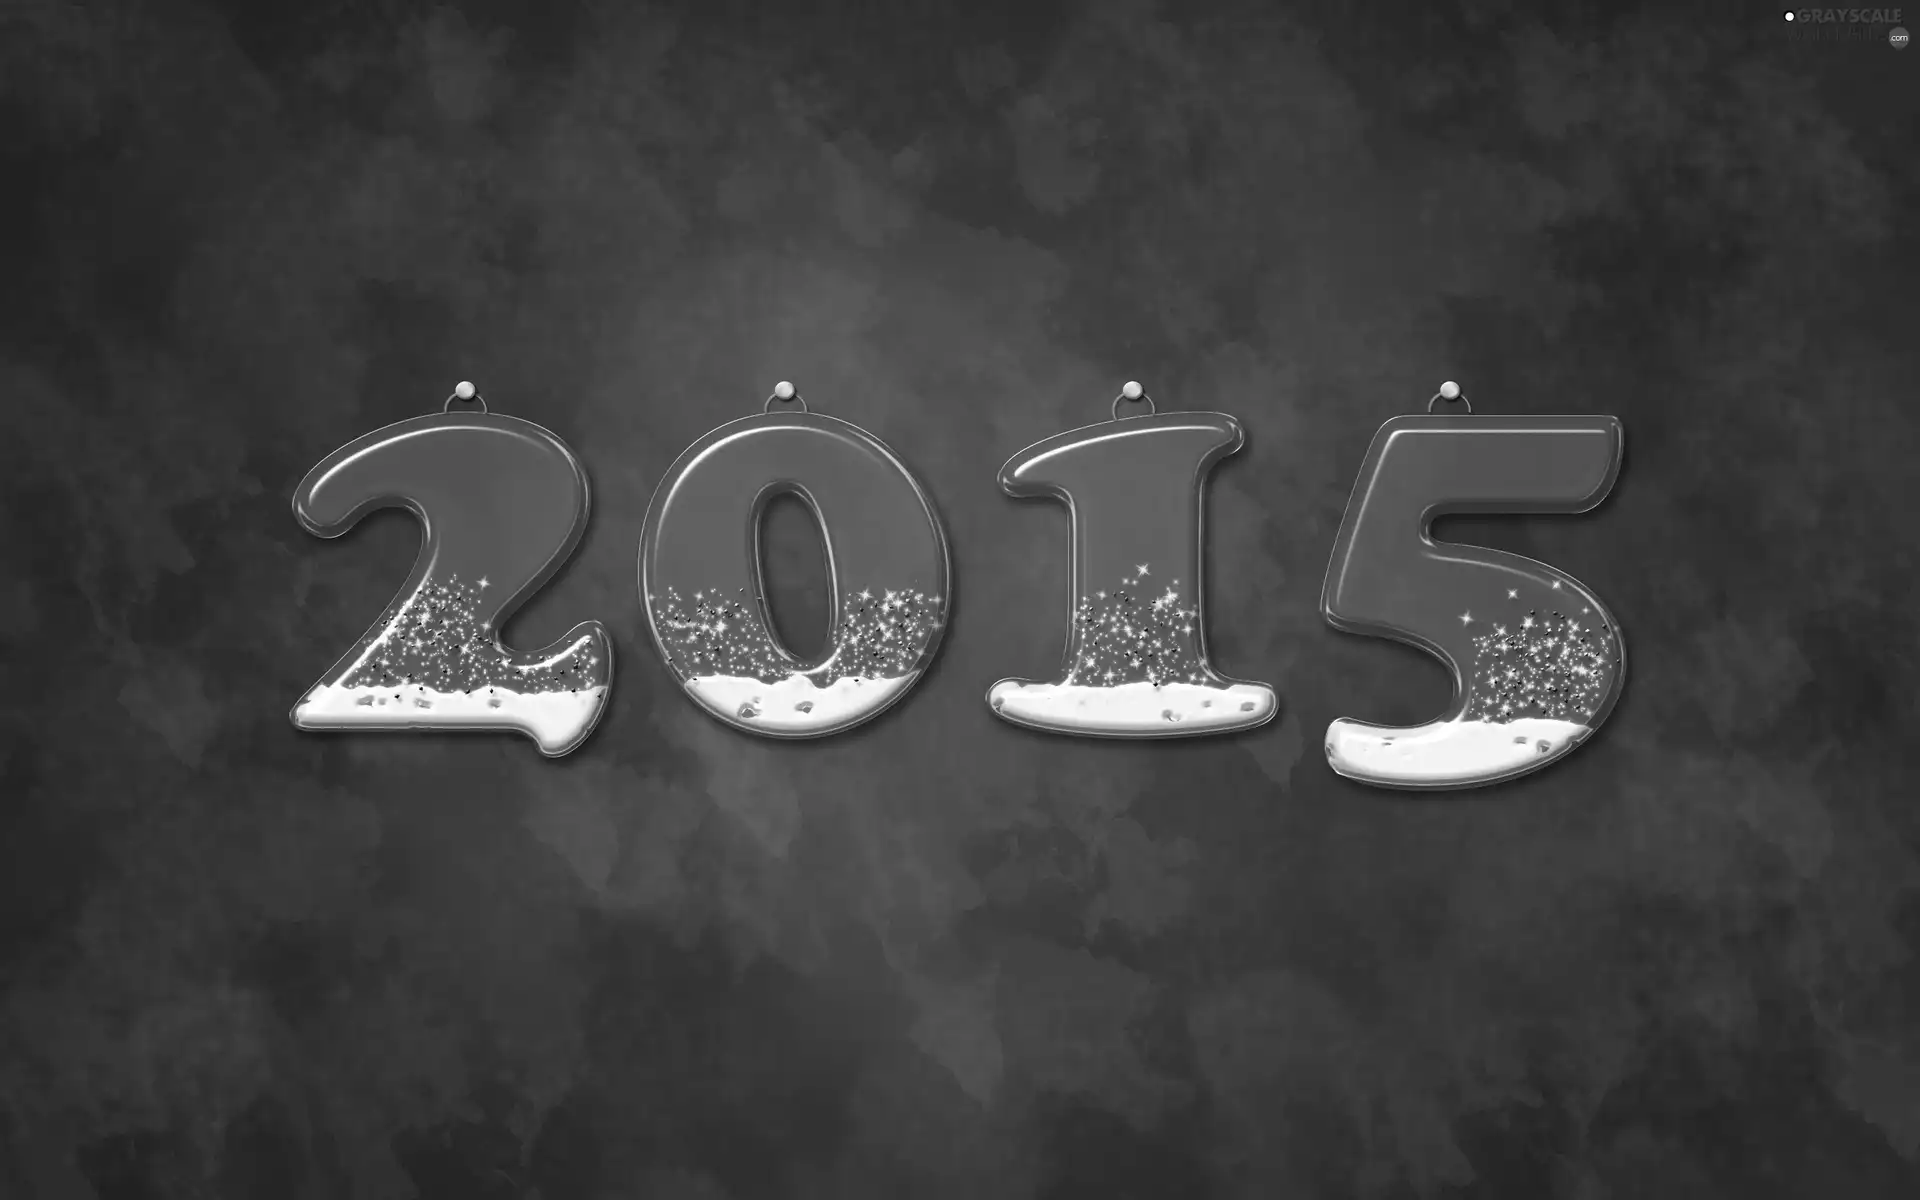 New Year, 2015